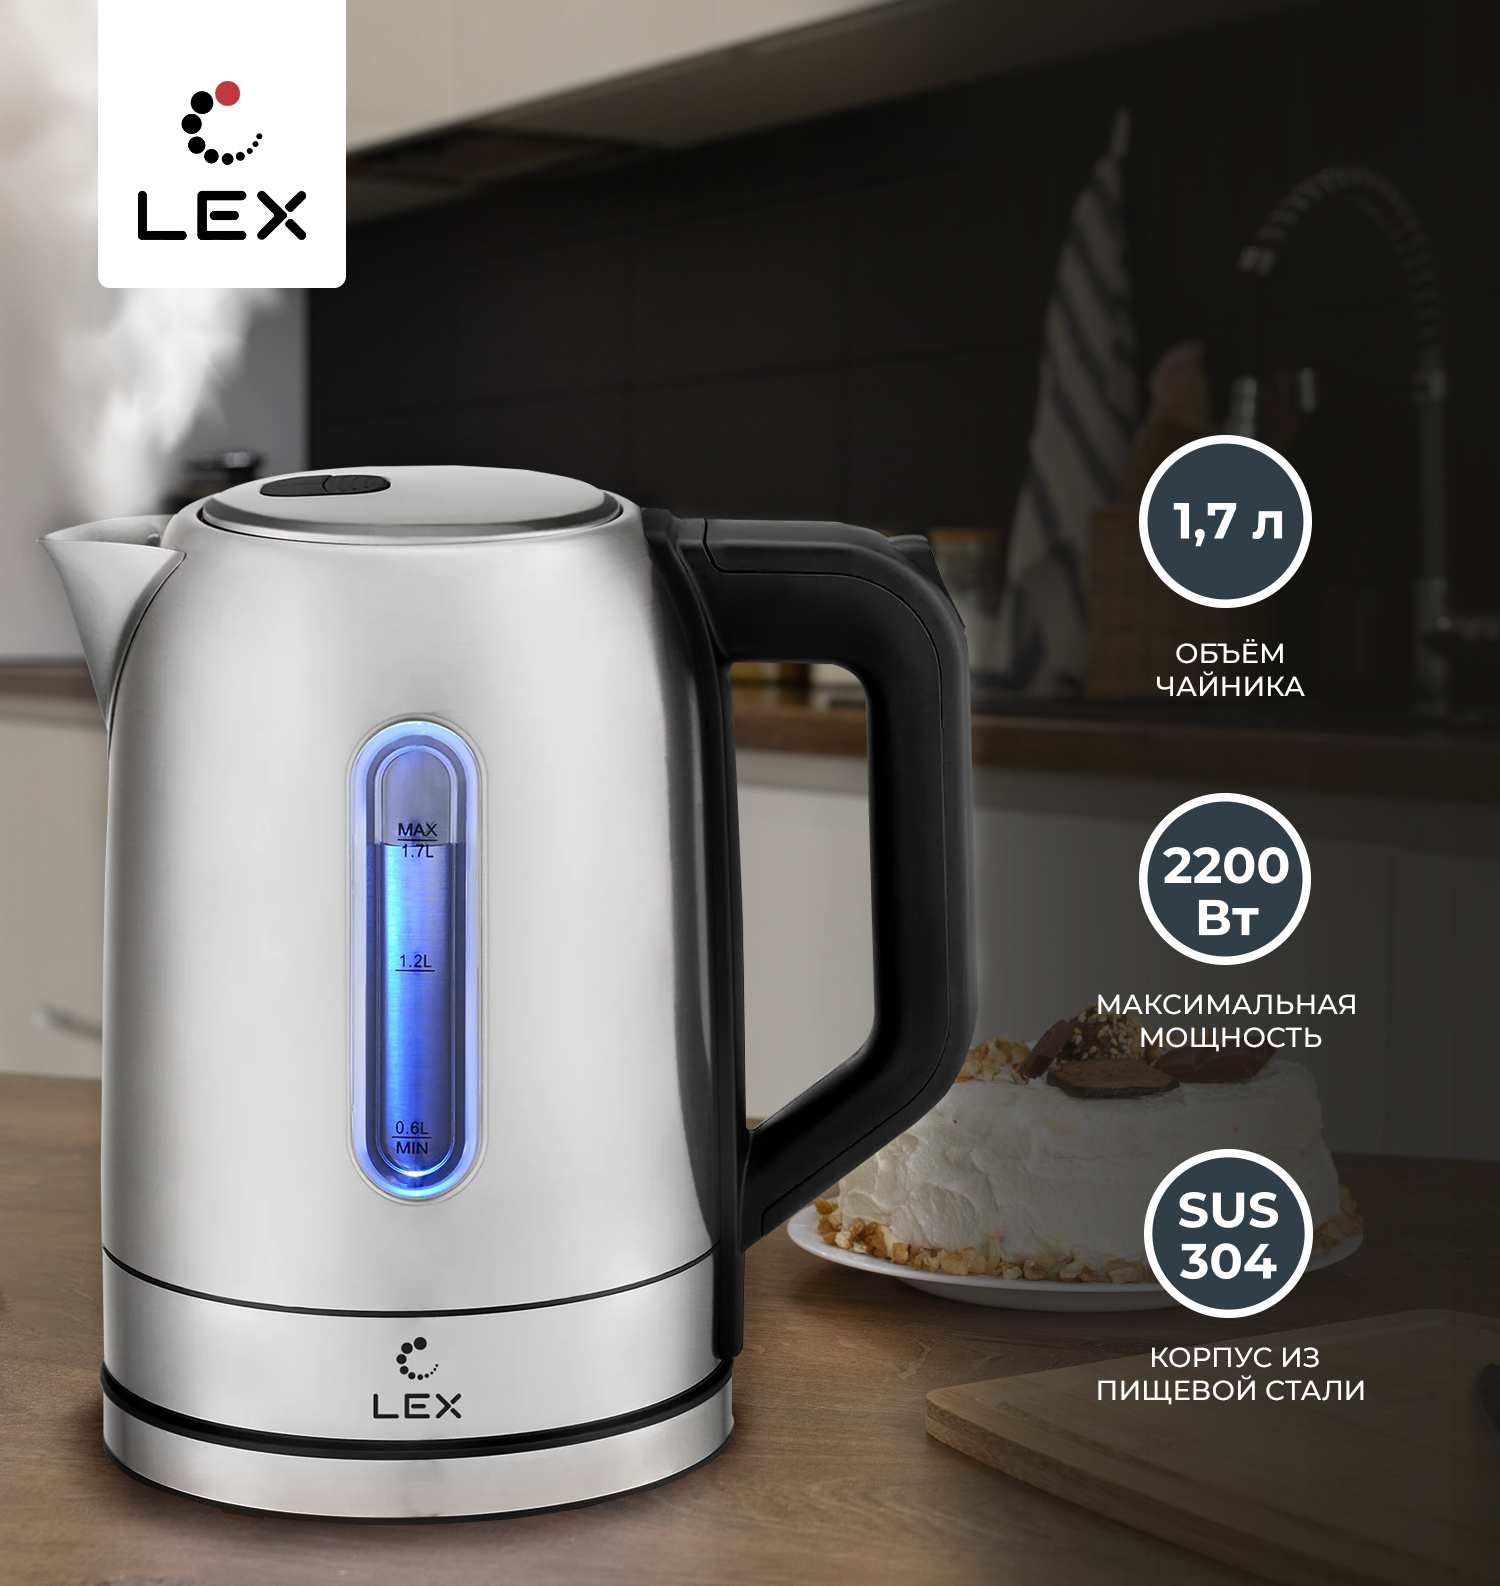 LEX LX 30018-1